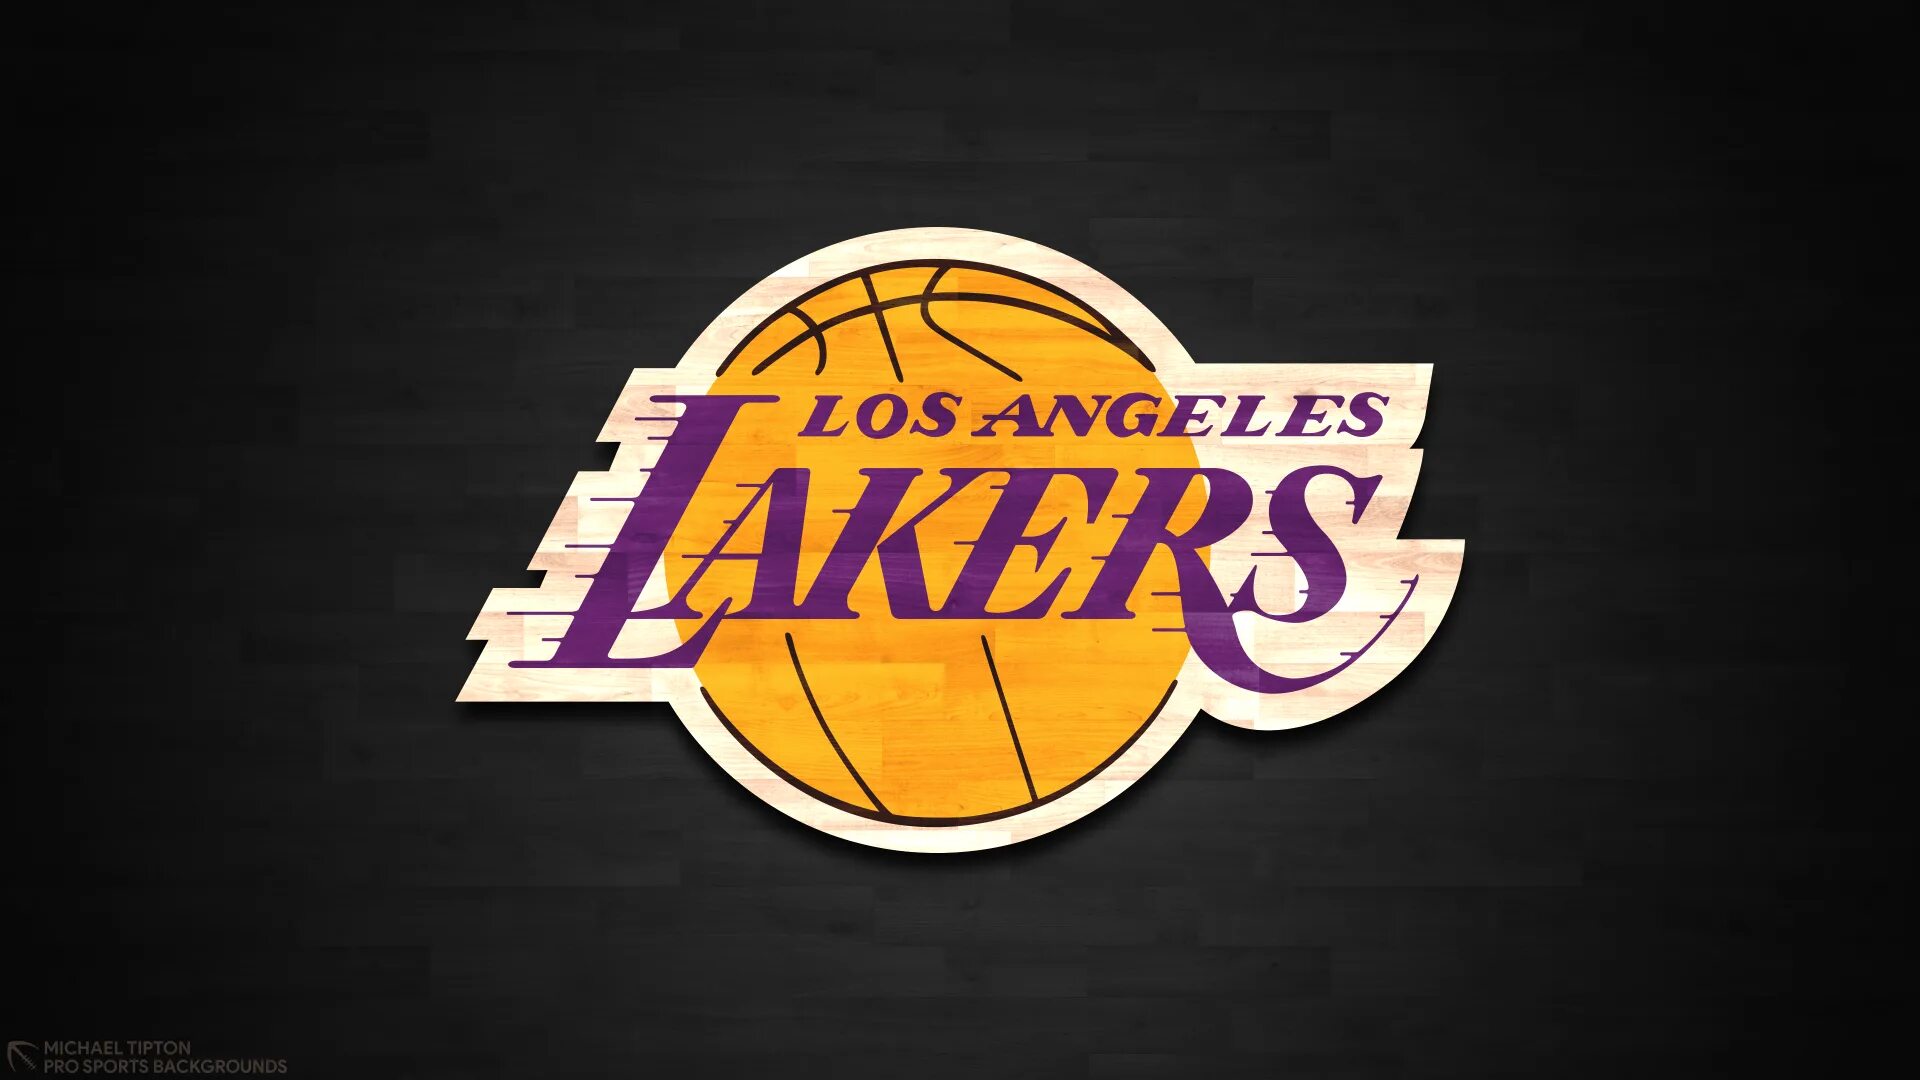 La lakers. Баскетбольная команда Lakers логотип. Лос Анджелес Лейкерс лого. Баскетбол Лос Анджелес Лейкерс. Баскетбольная команда Лос Анджелес логотип.